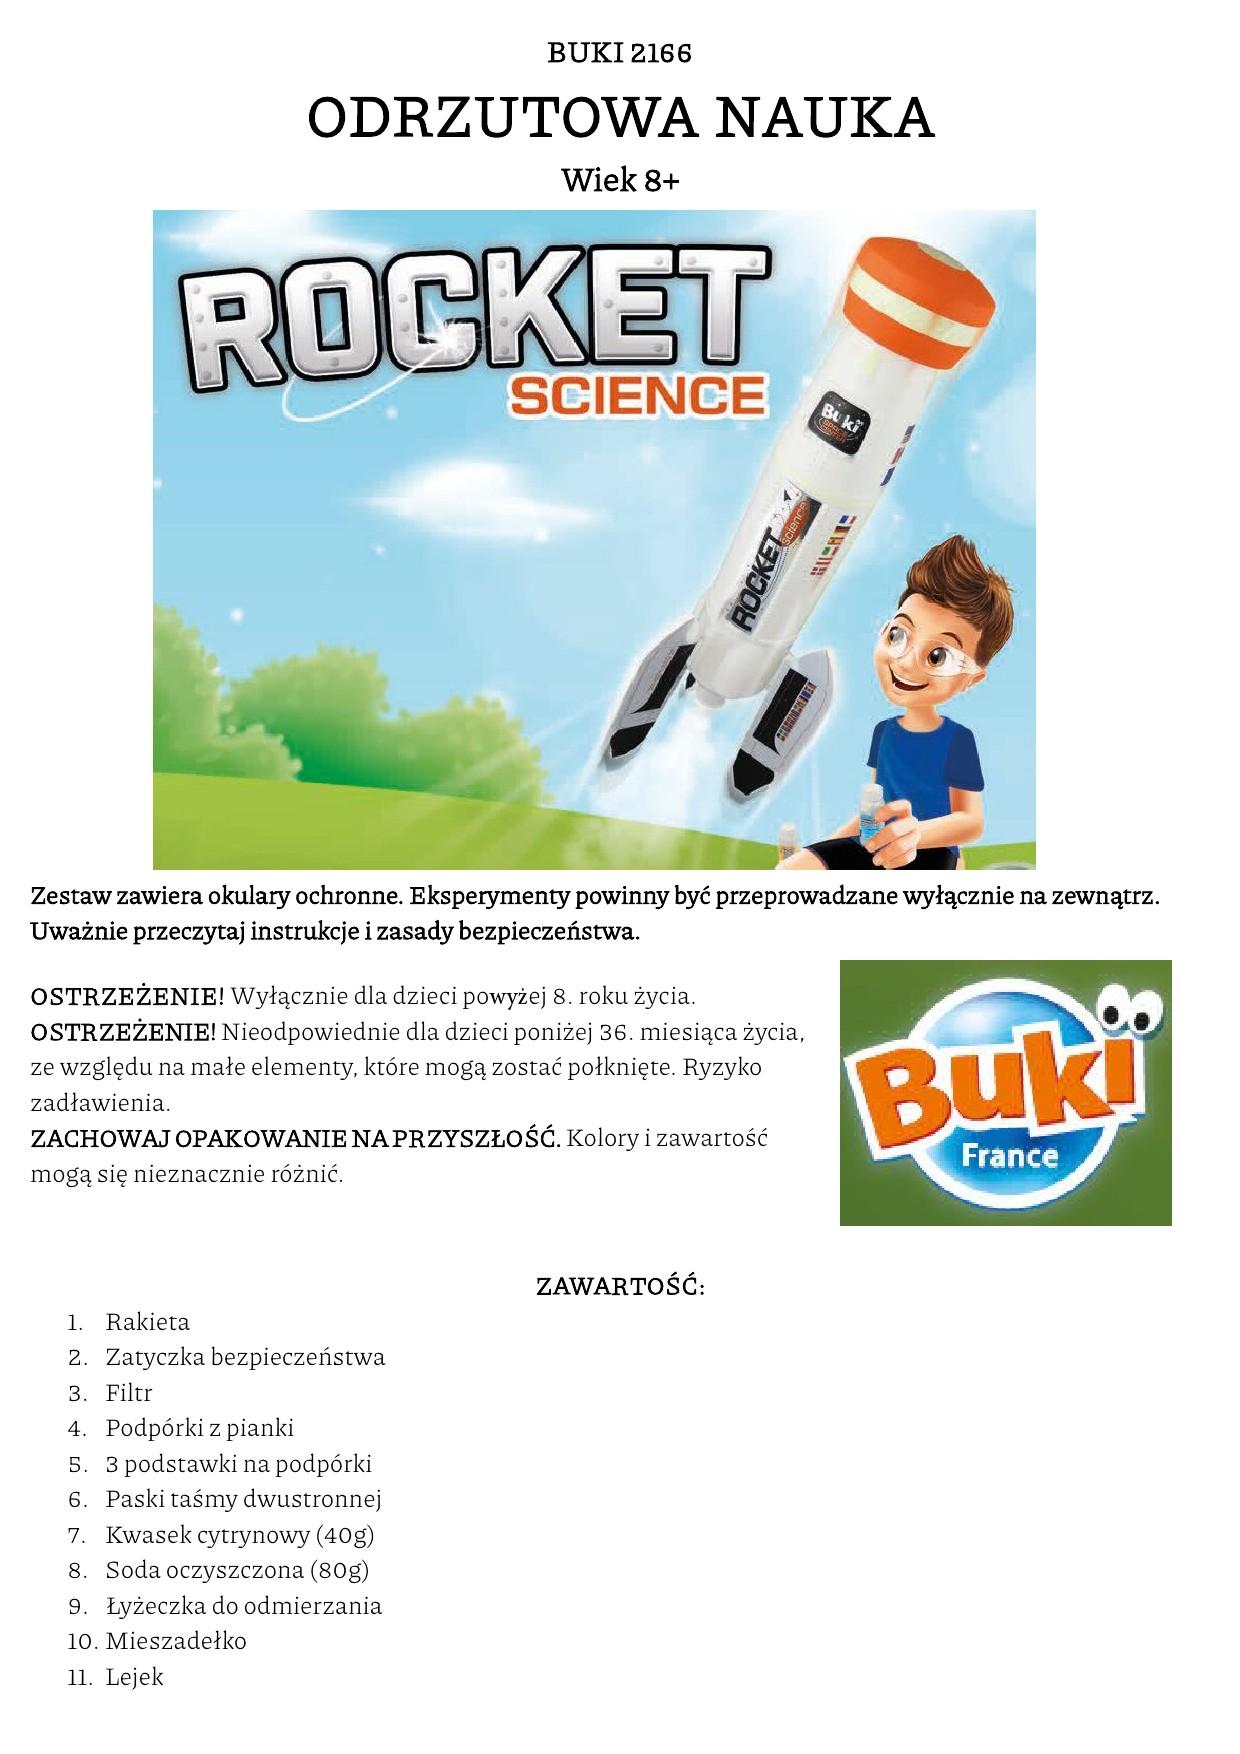 Rocket science - 2166 - BUKI France 